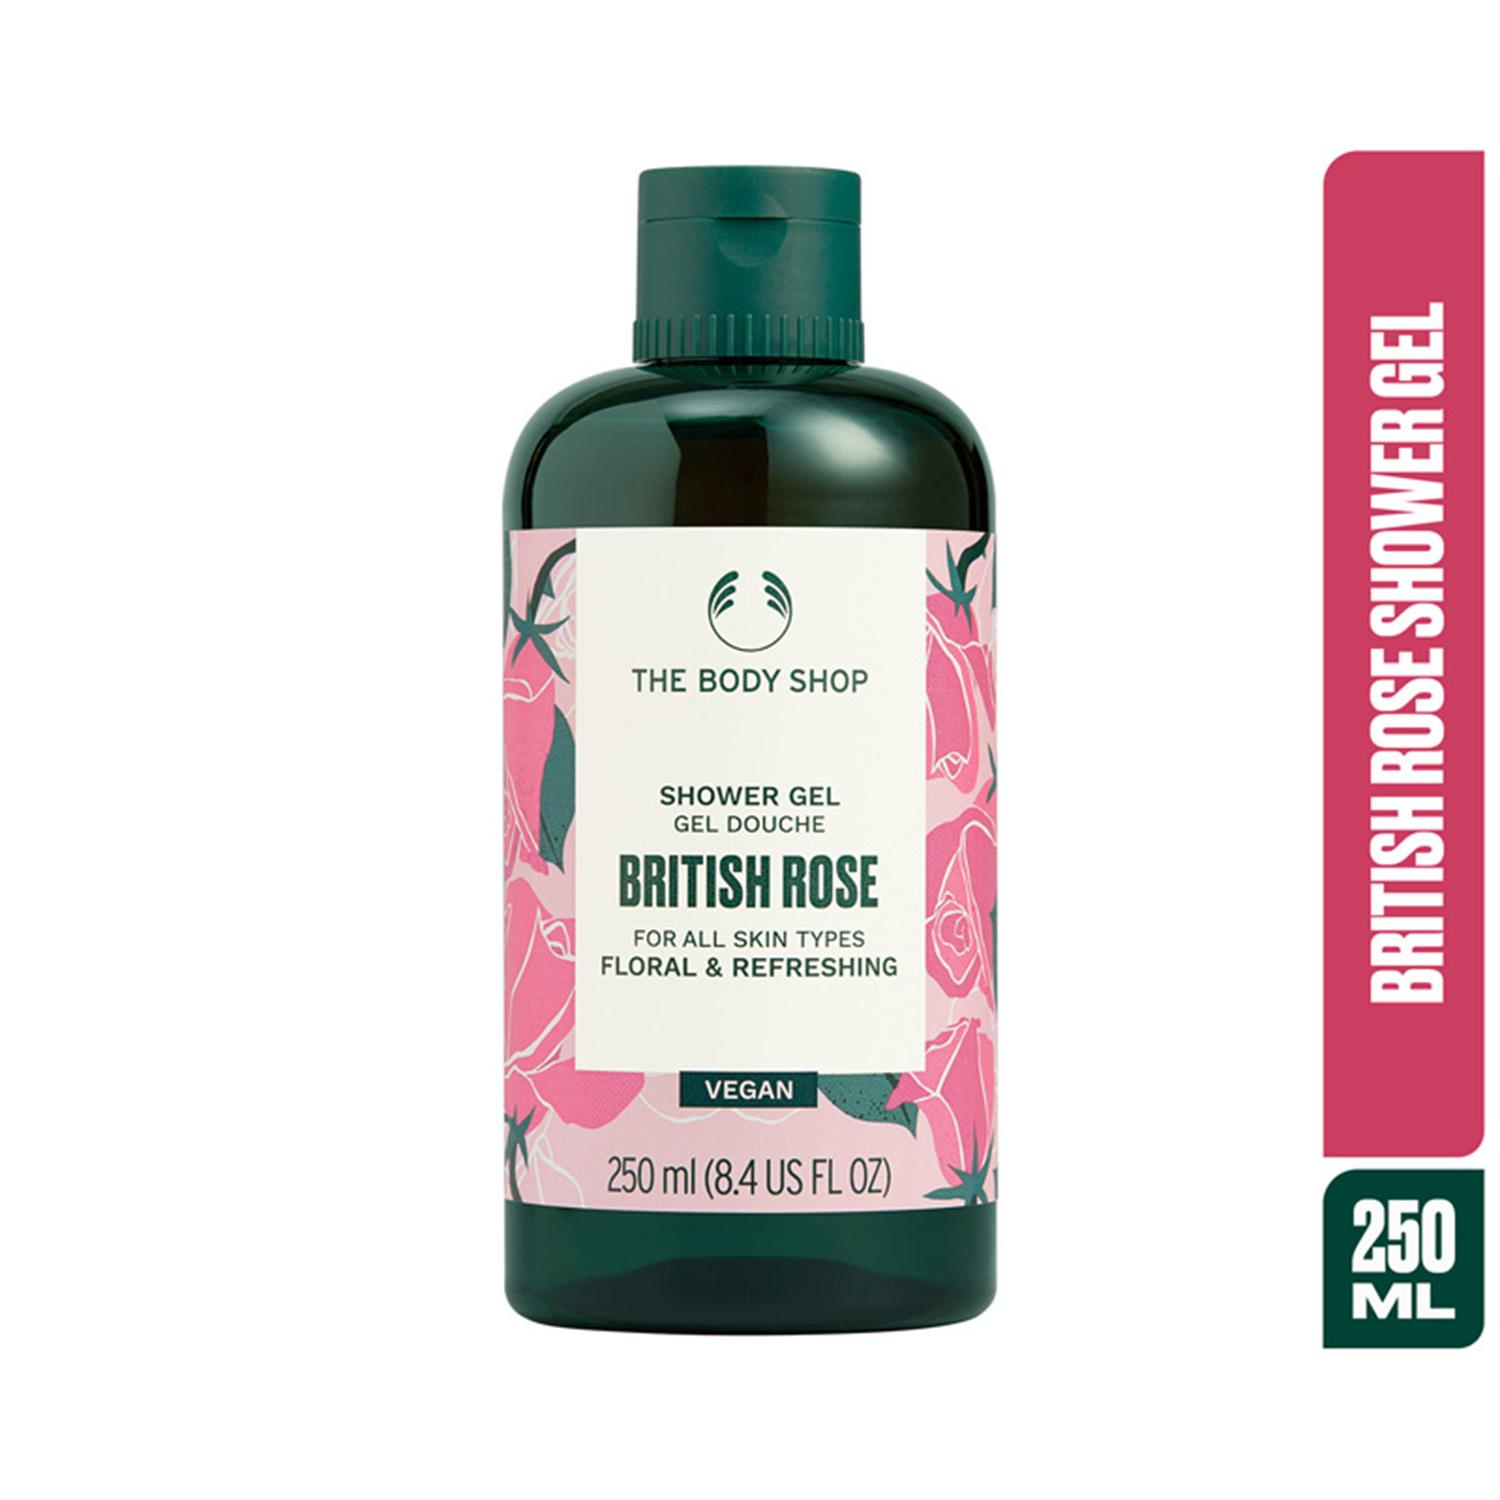 The Body Shop | The Body Shop British Rose Shower Gel (250ml)